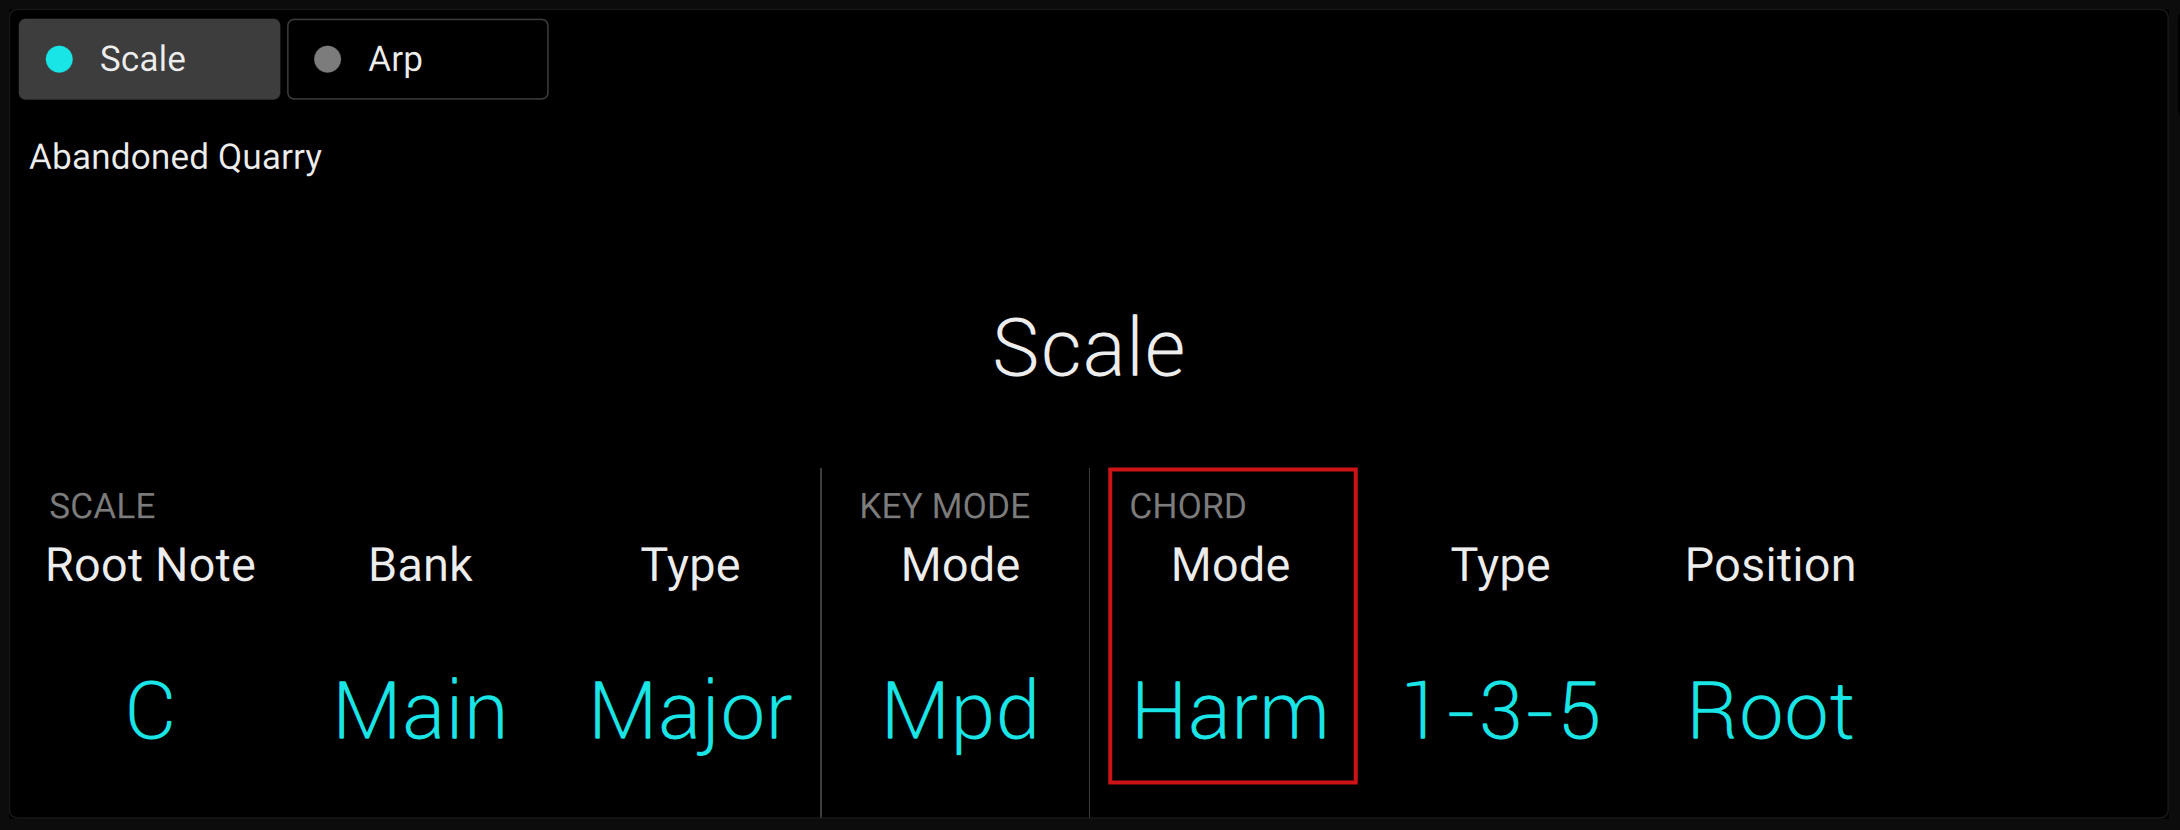 KS-MK3_D_PlayAssist-Scale-CHORD-Mode.jpg